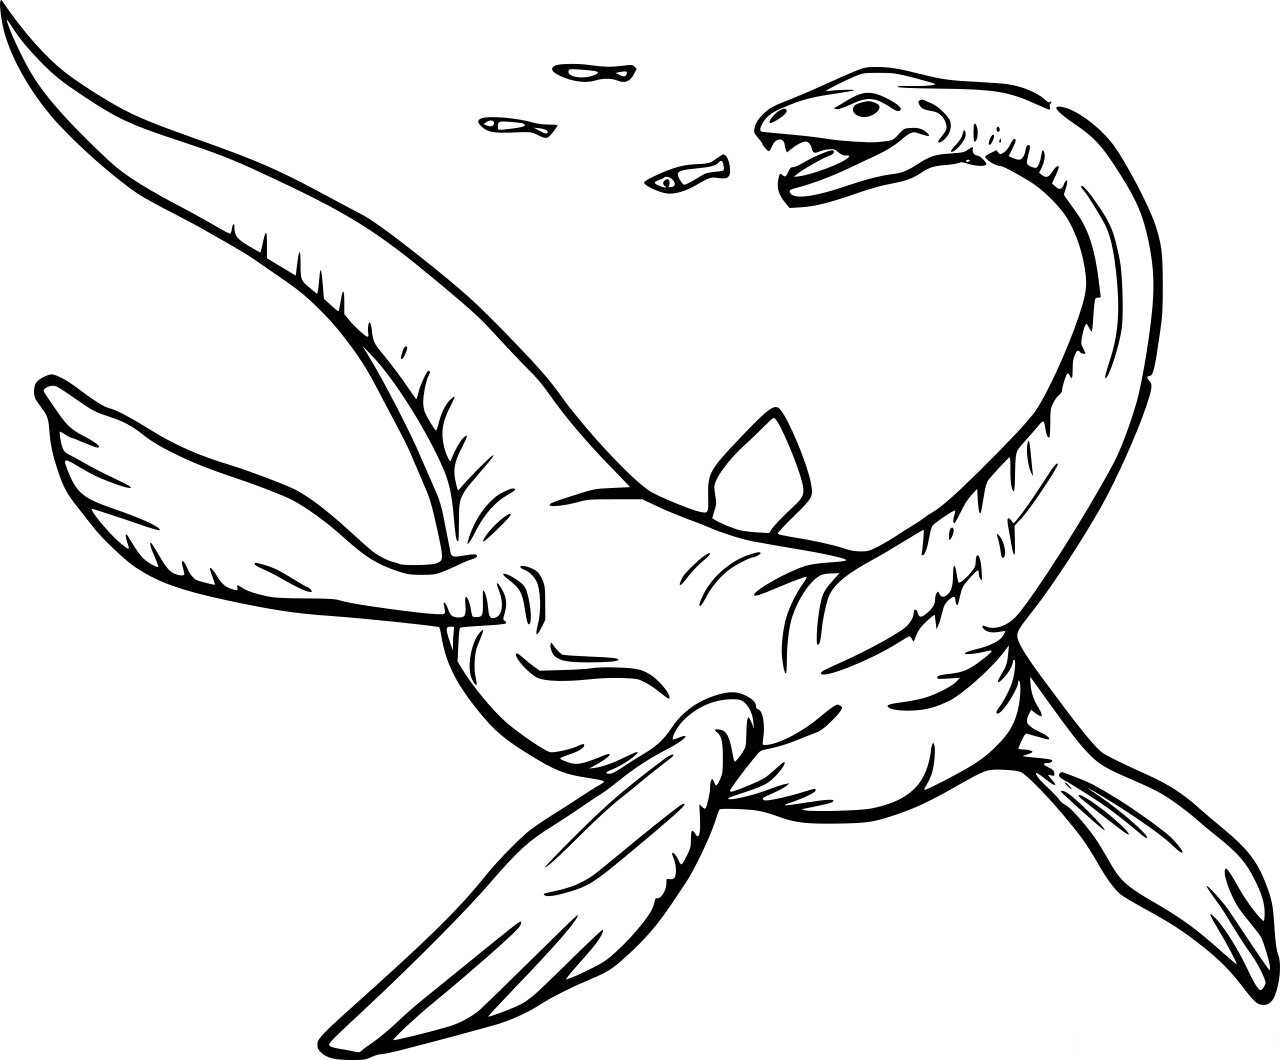 Plesiosaurus Dinosaur eating fish Coloring Pages - Dinosaurs Coloring